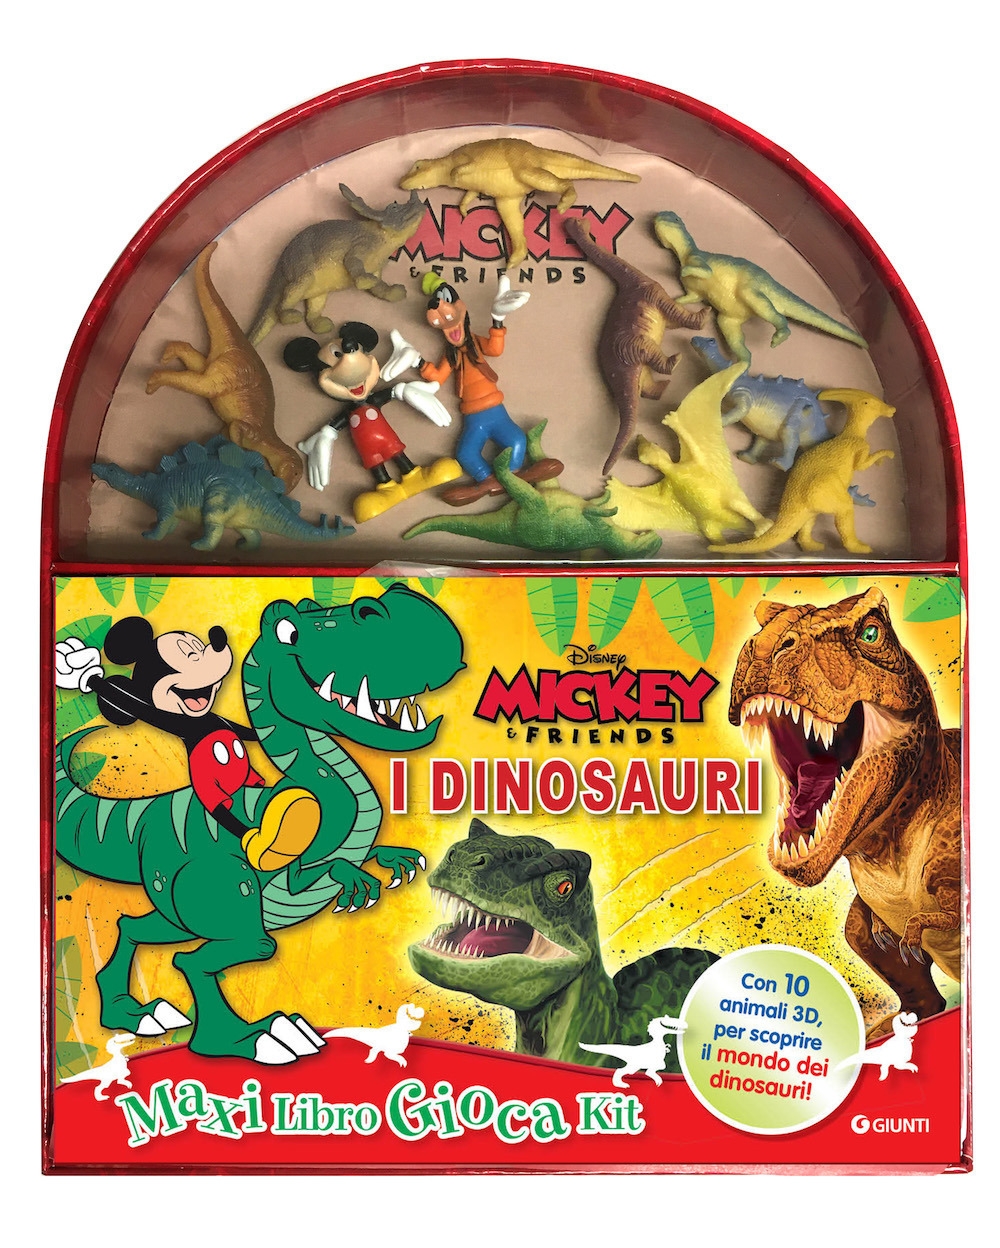 9788852237201 2020 - I dinosauri. Mickey & friends. Maxi libro gioca kit.  Con gadget 